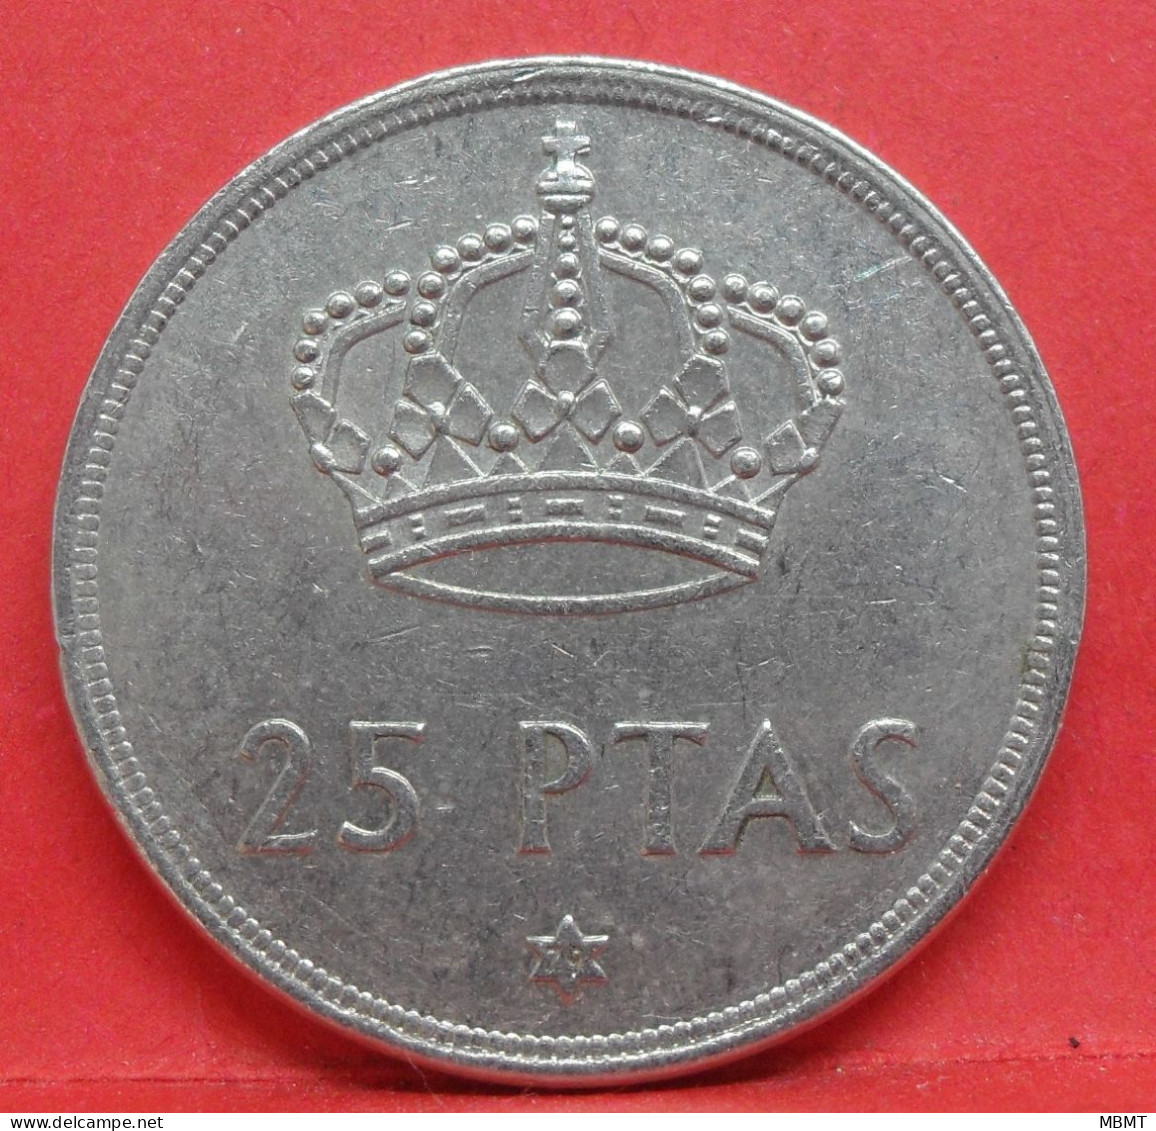 25 Pesetas 1975 étoile 79 - TTB - Pièce Monnaie Espagne - Article N°2450 - 25 Pesetas